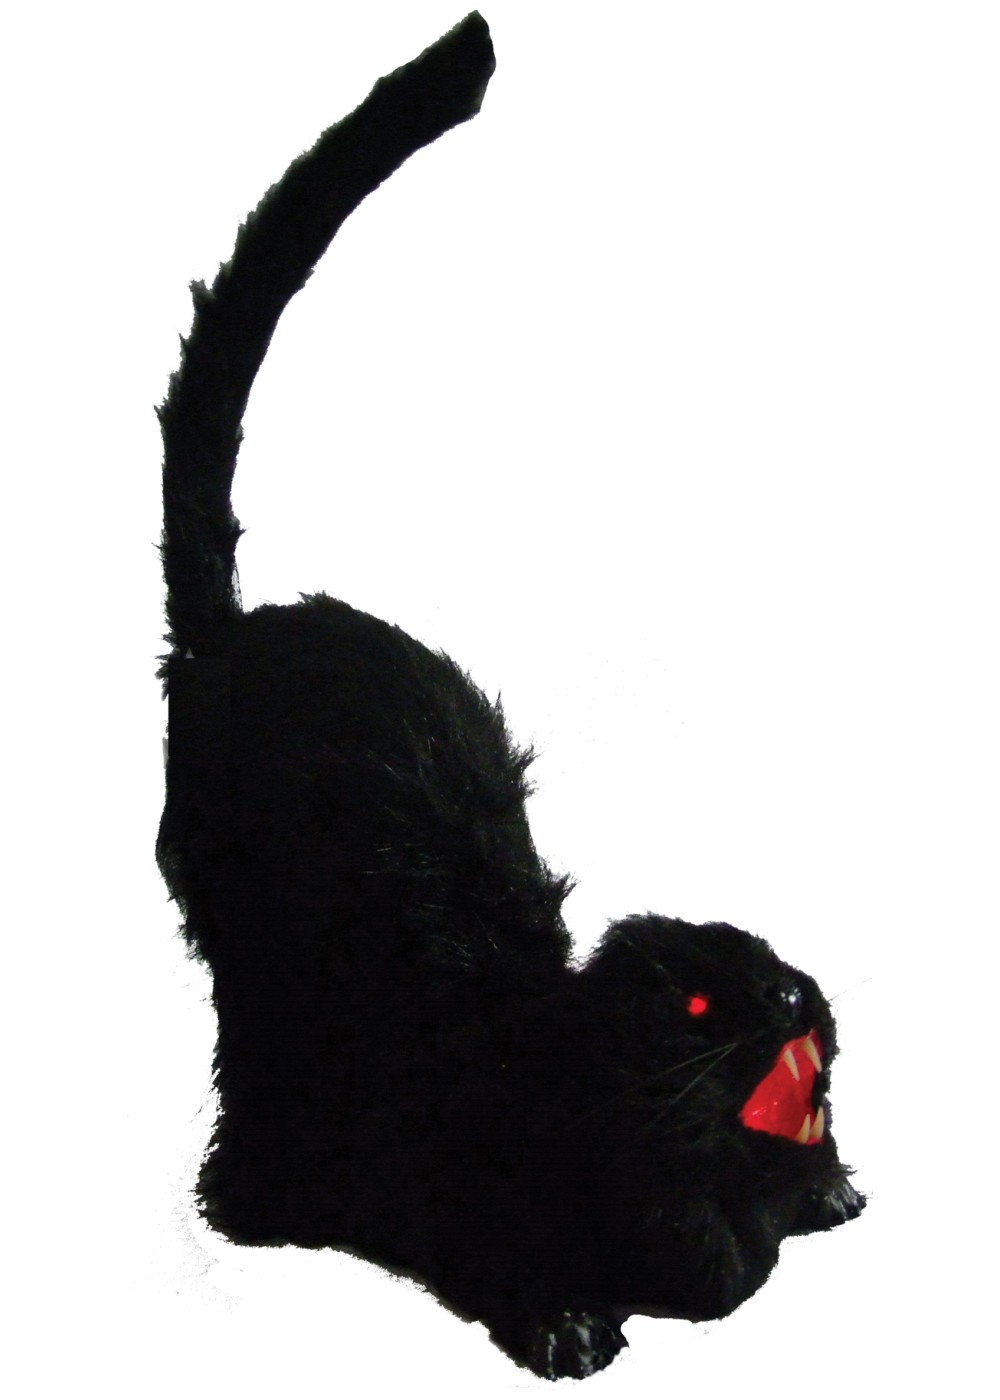 Black Cat Animated Decoration